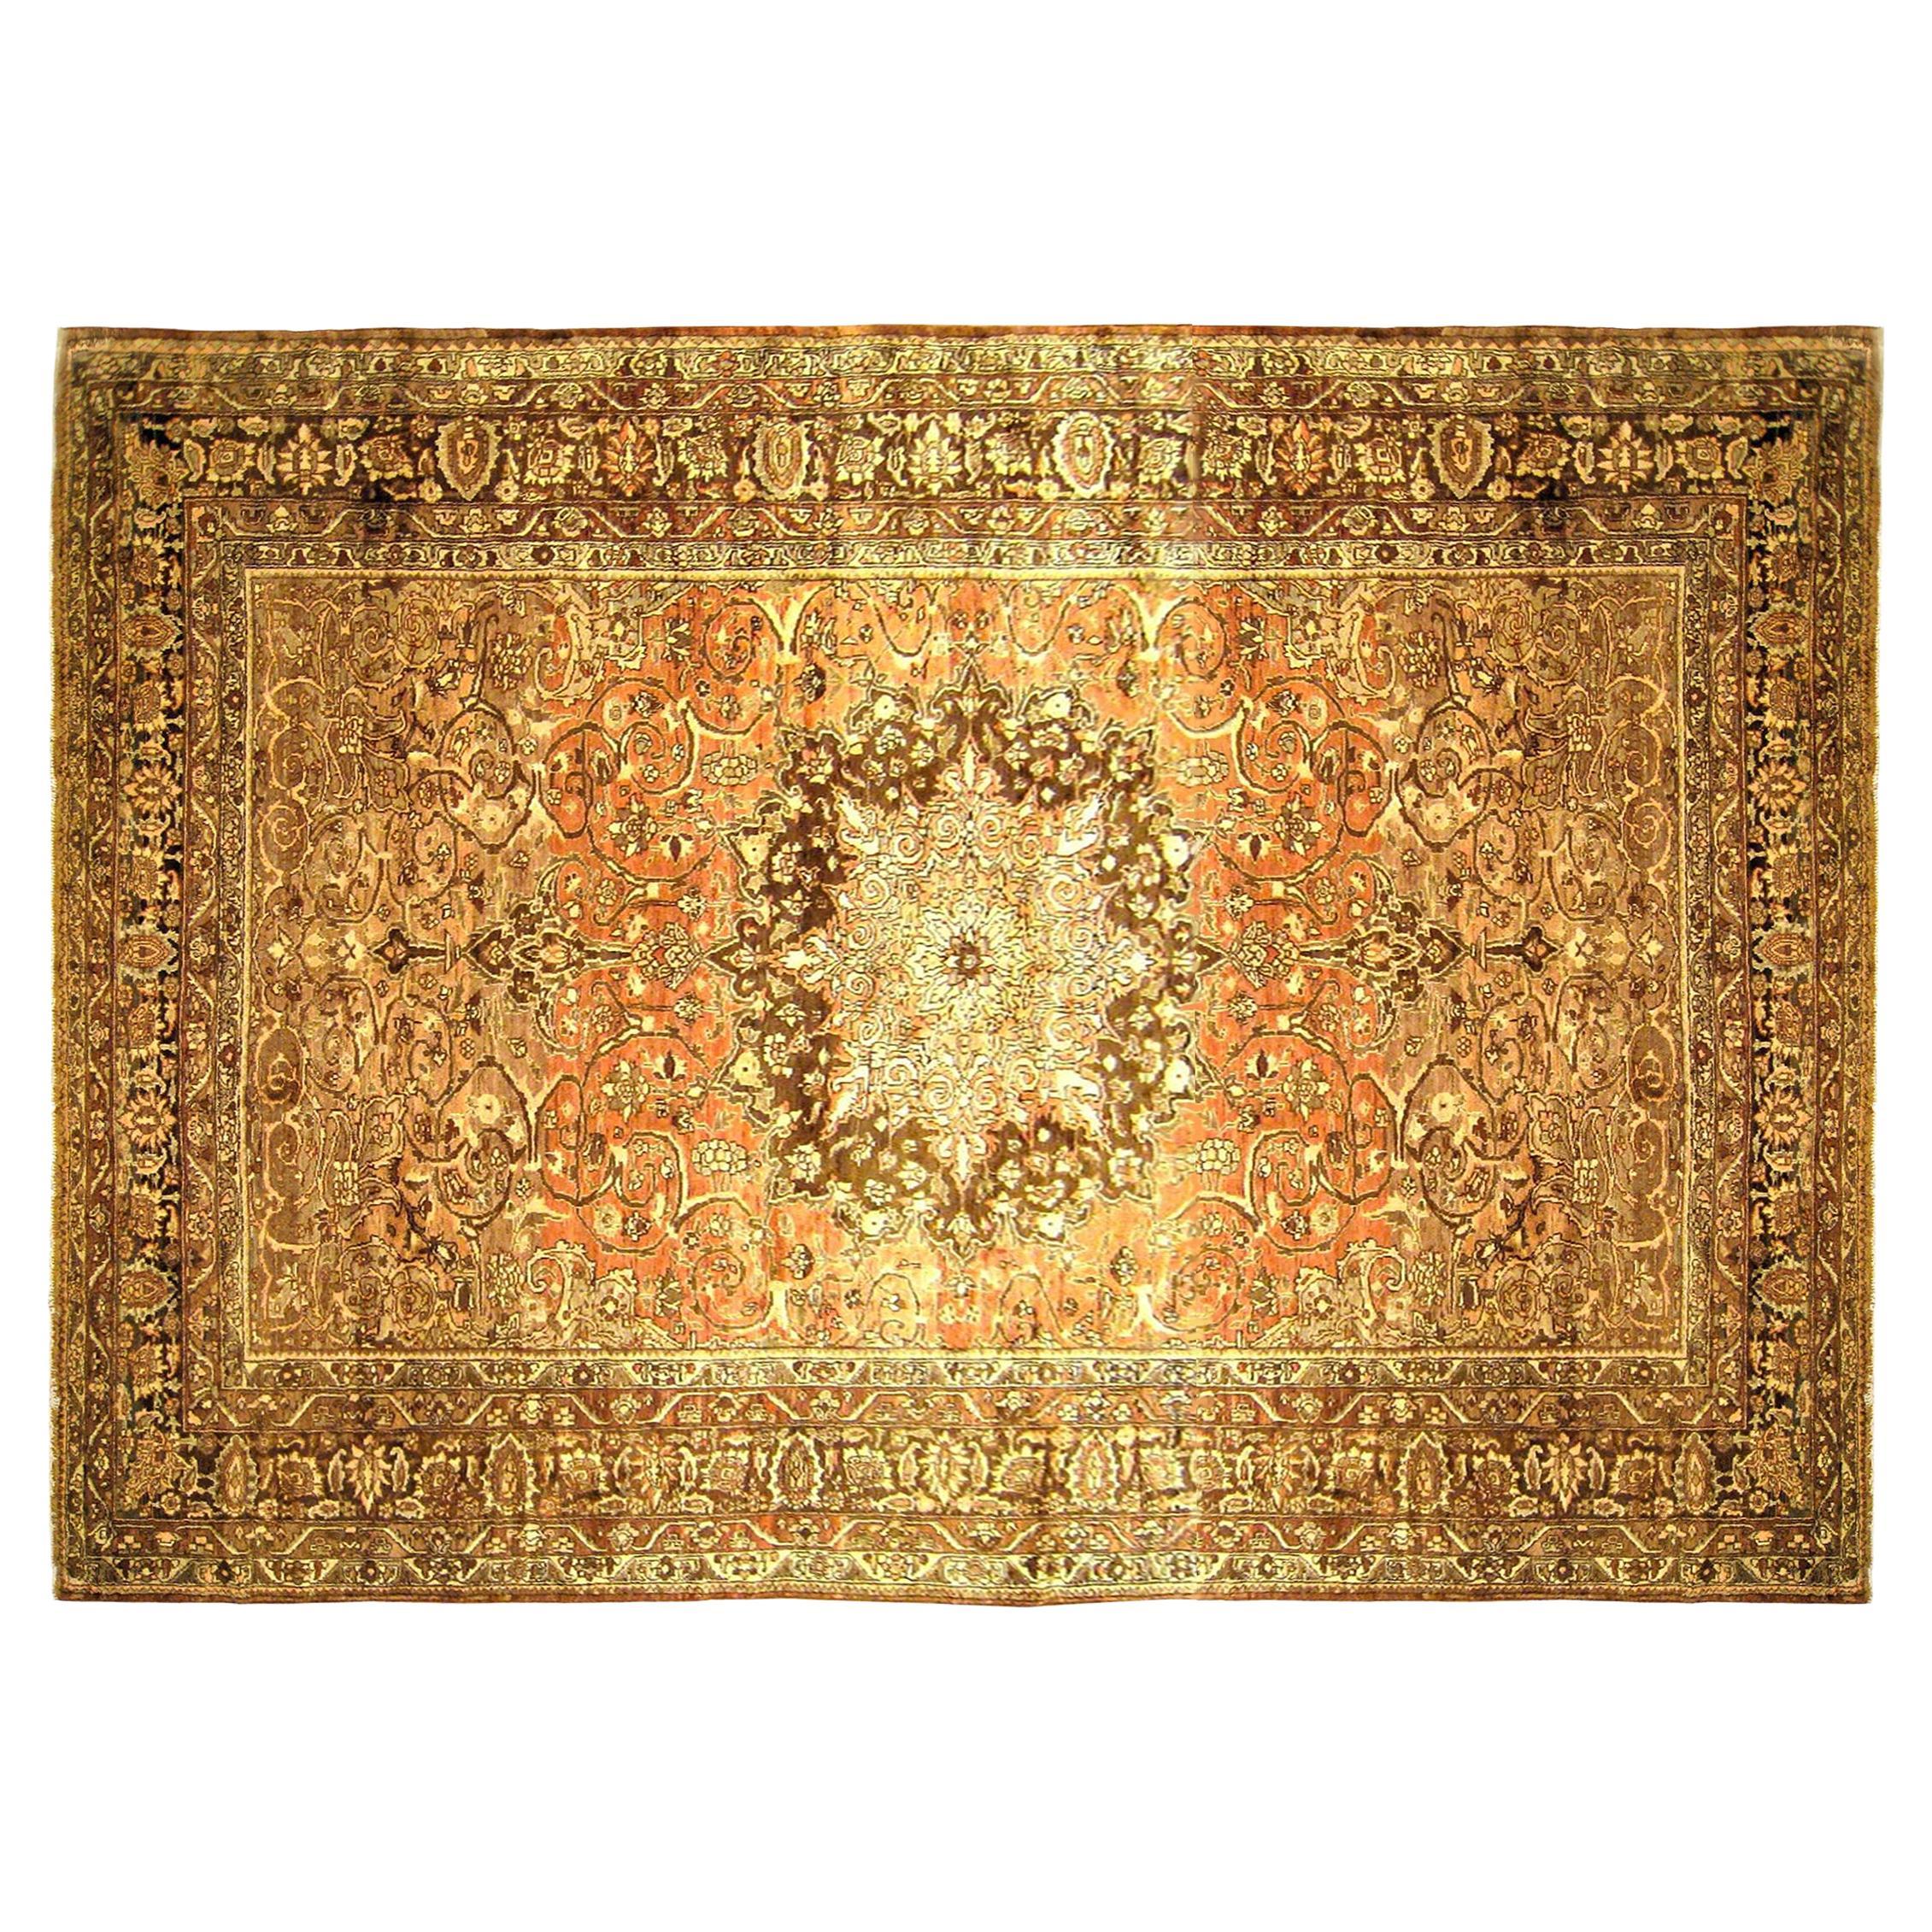 Antique Persian Baktiari Oriental Rug, in Room size, w/ Central Medallion